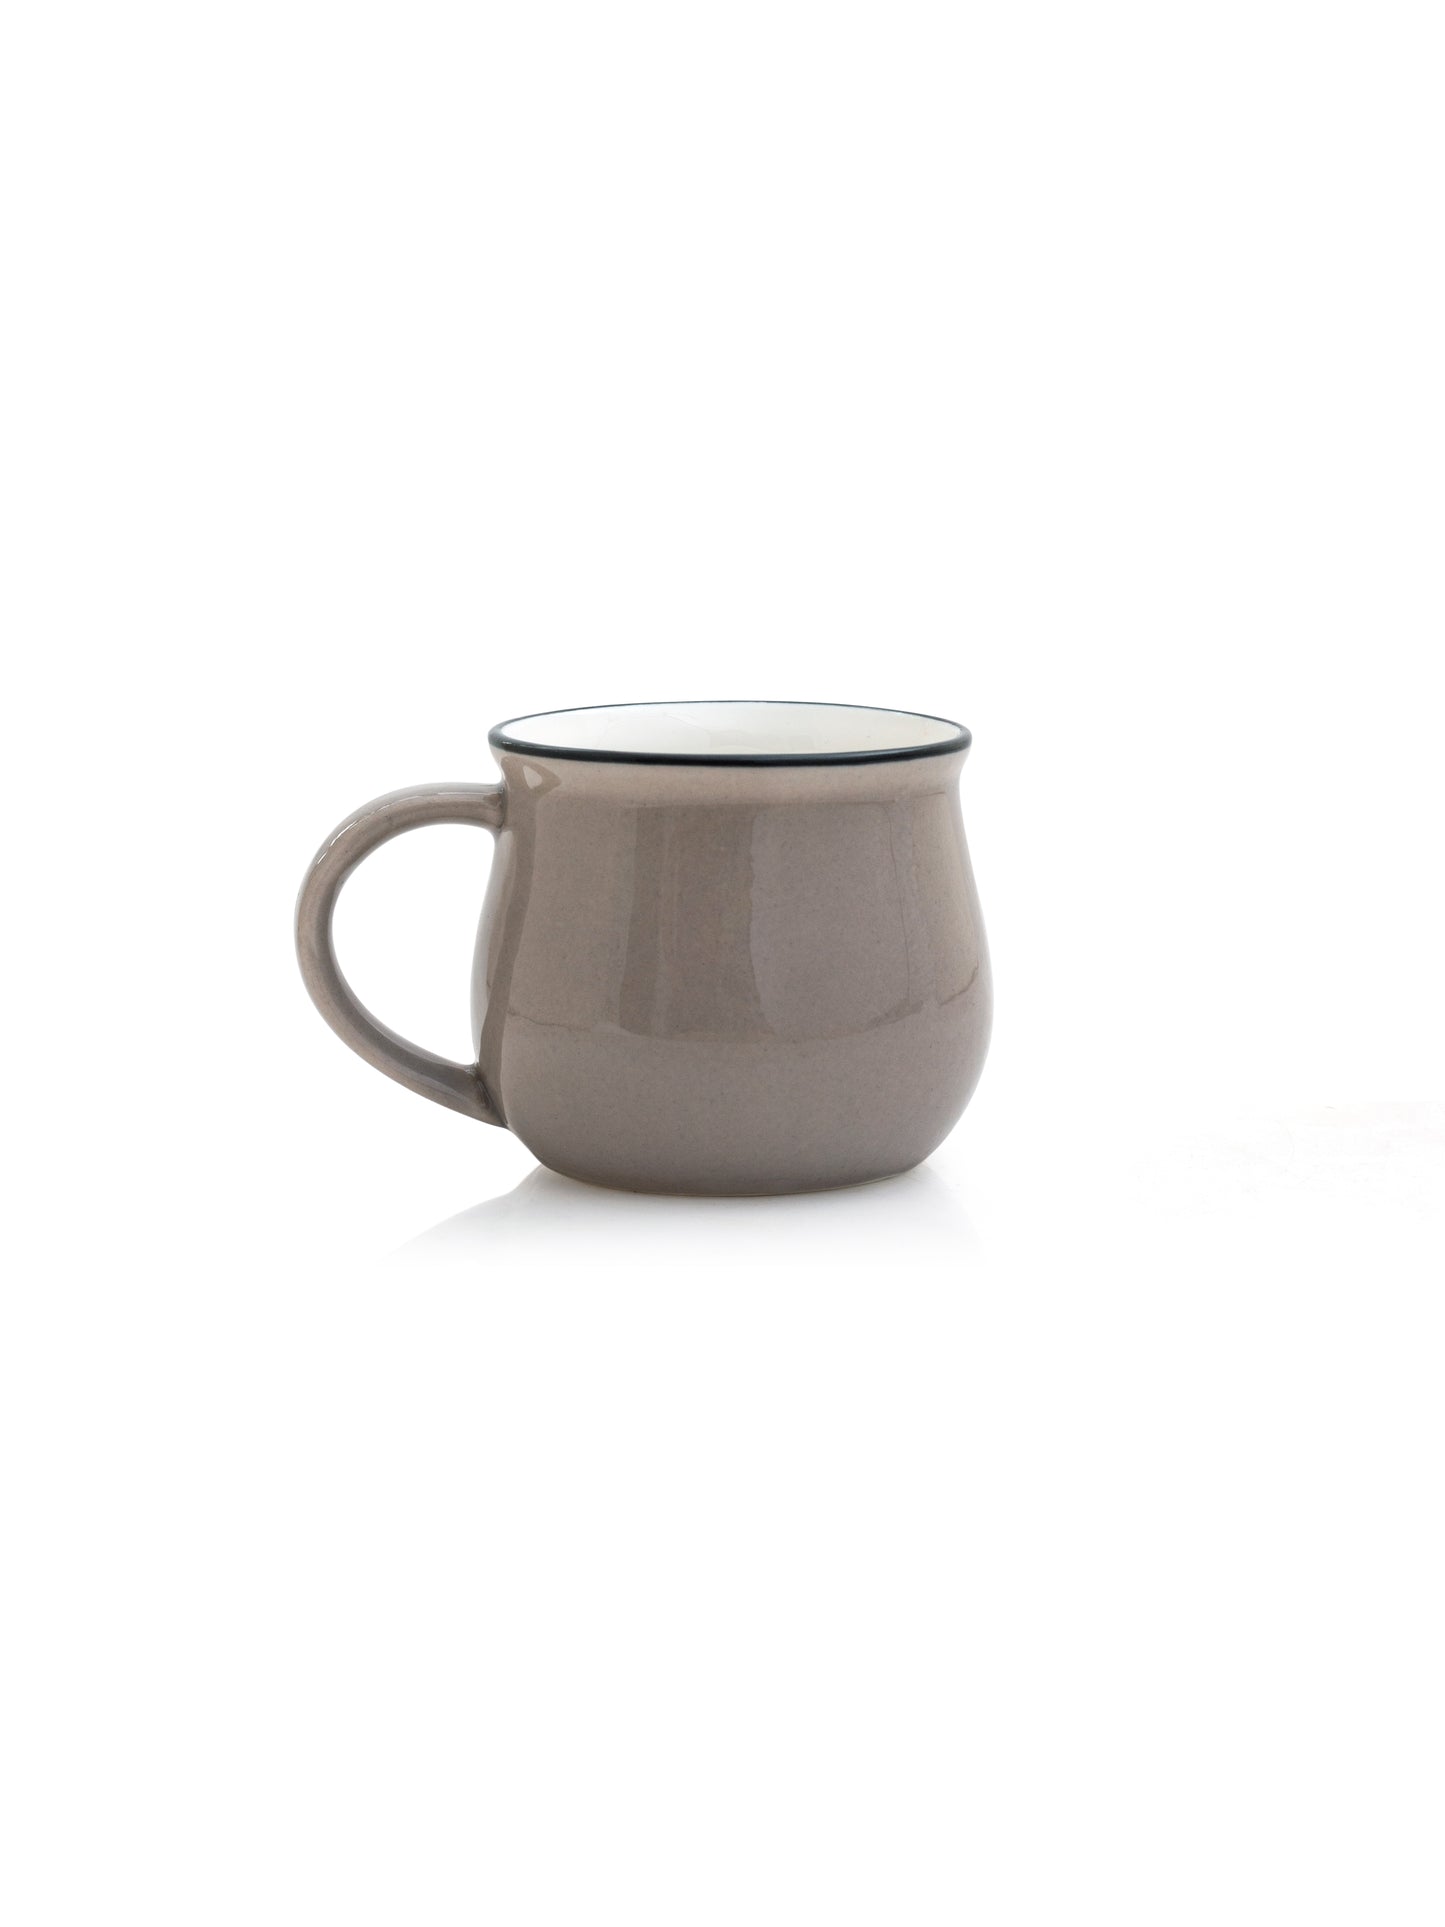 JCPL Fine Ceramic Donald Coffee Mug/  Tea Cup Set of 6 (160Ml) Multicolour